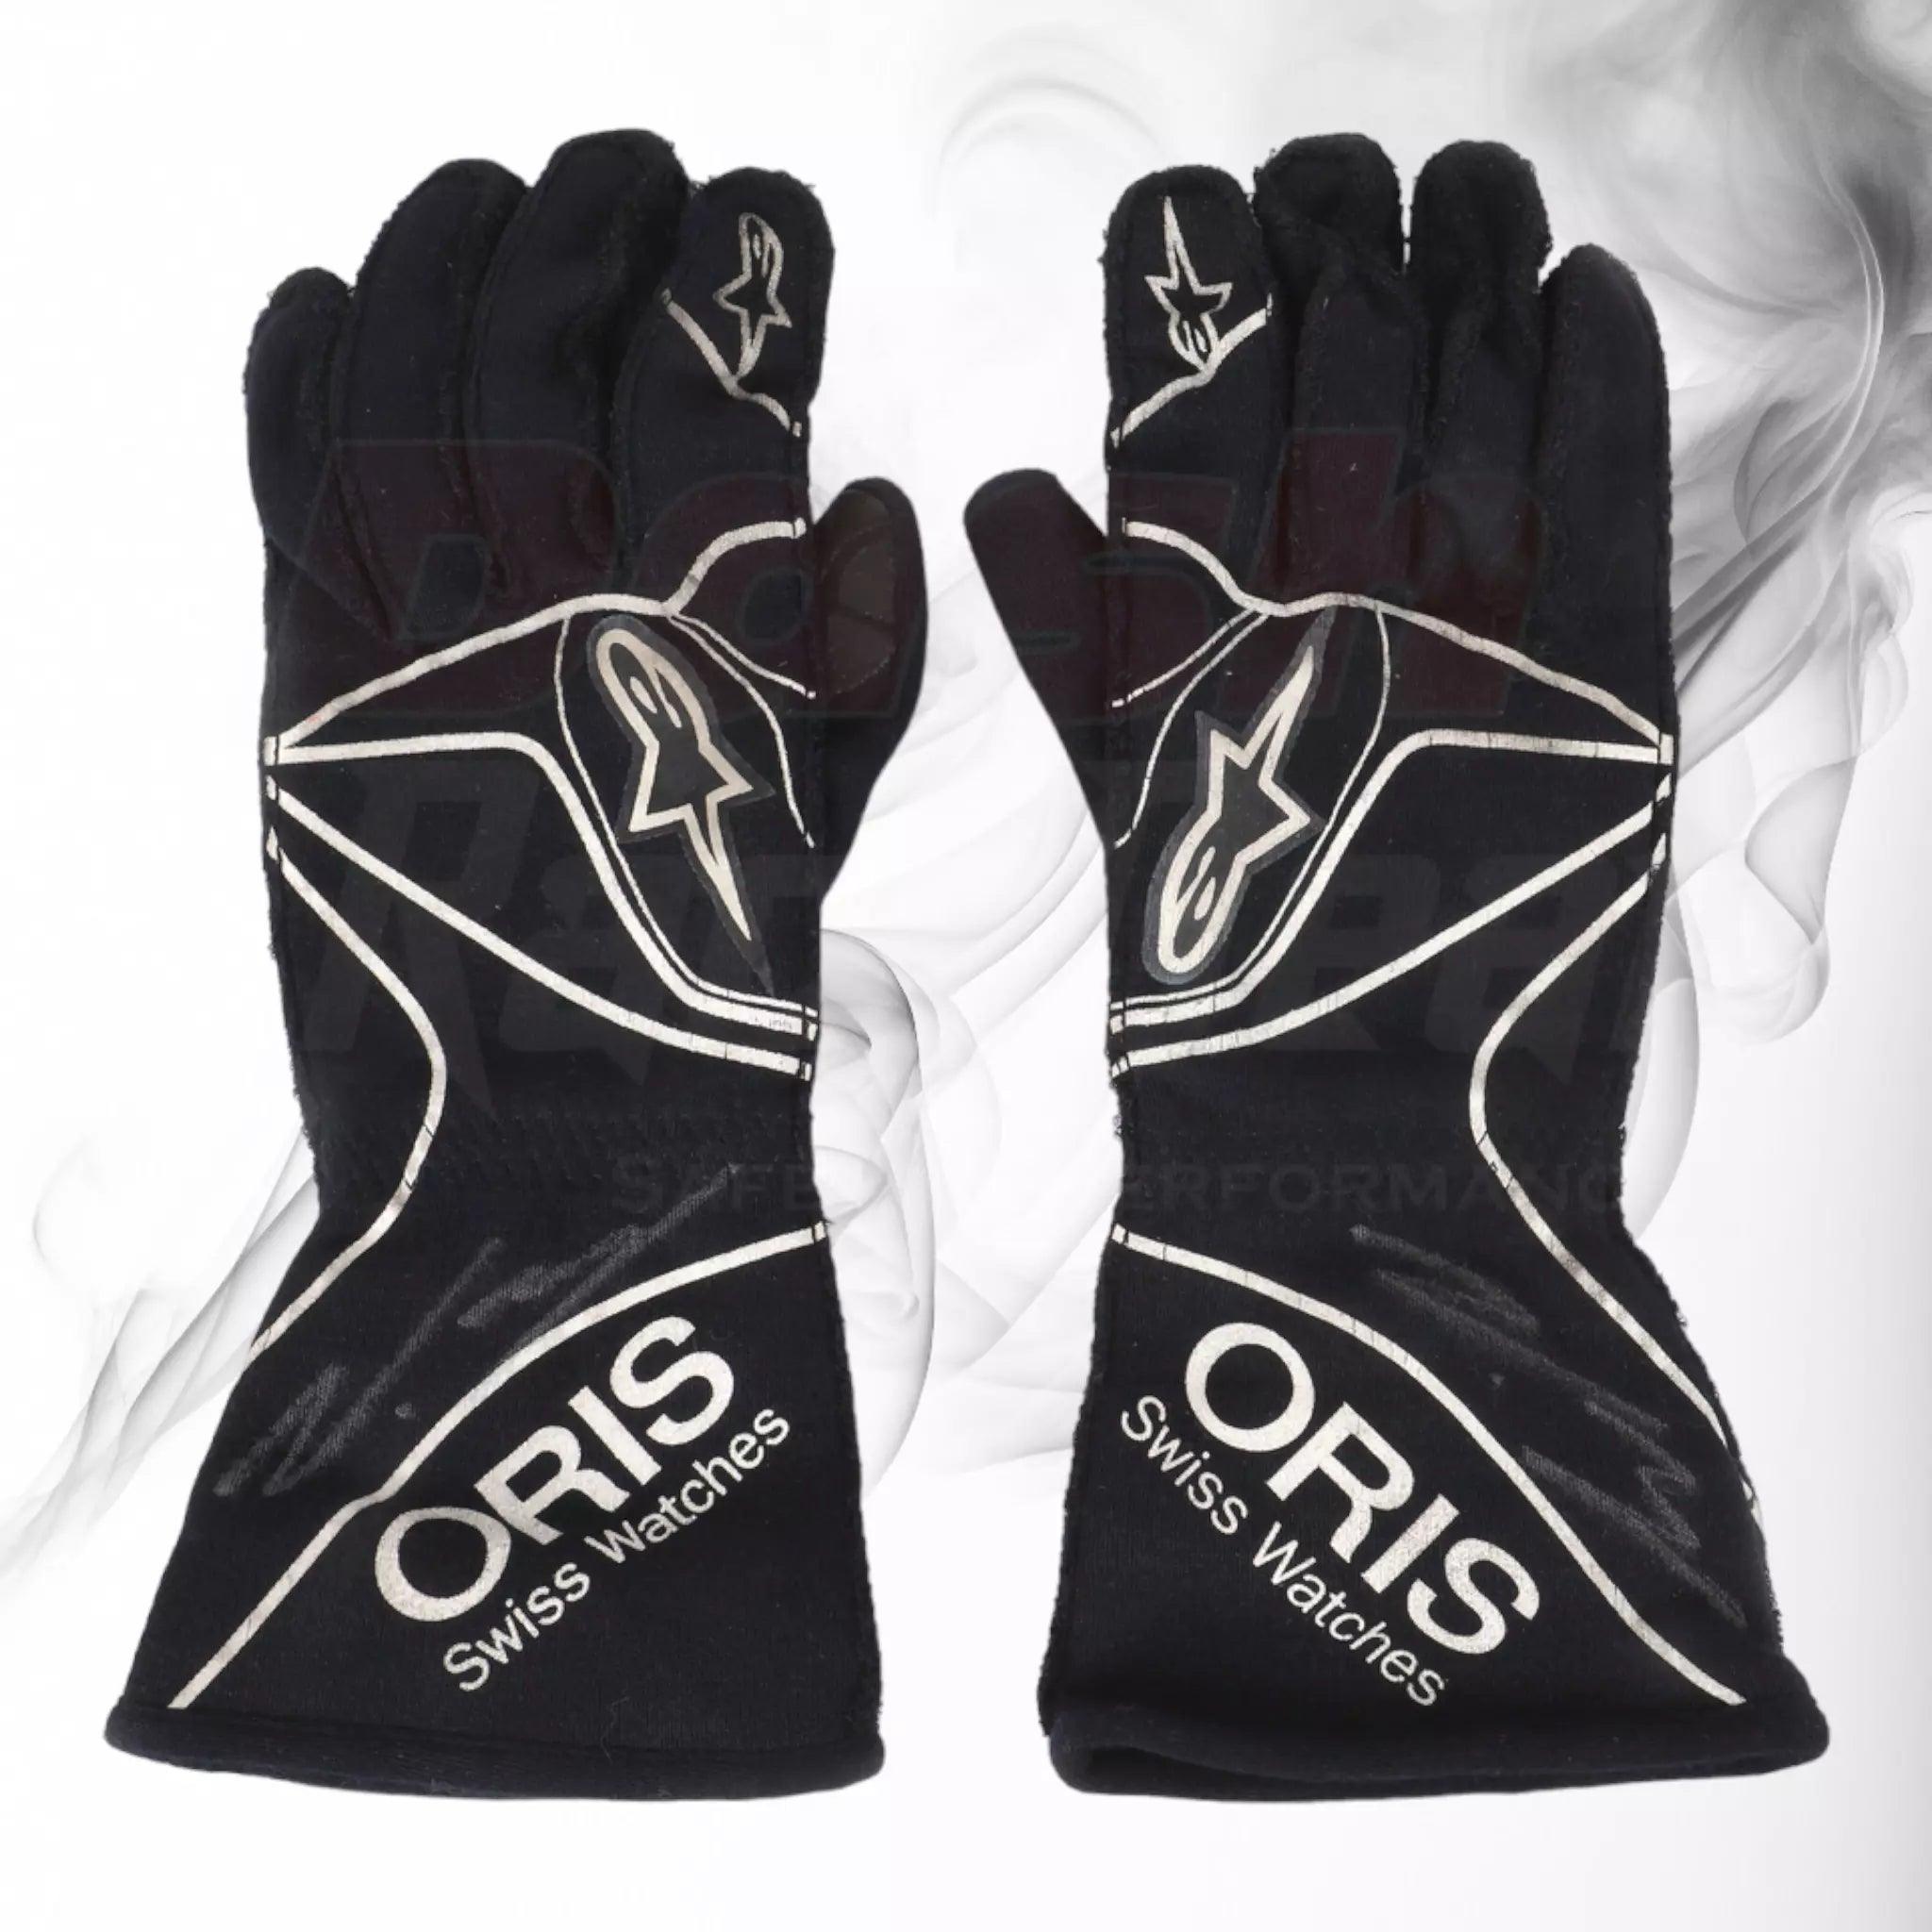 2015 Valtteri Bottas F1 Race Gloves - Dash Racegear 